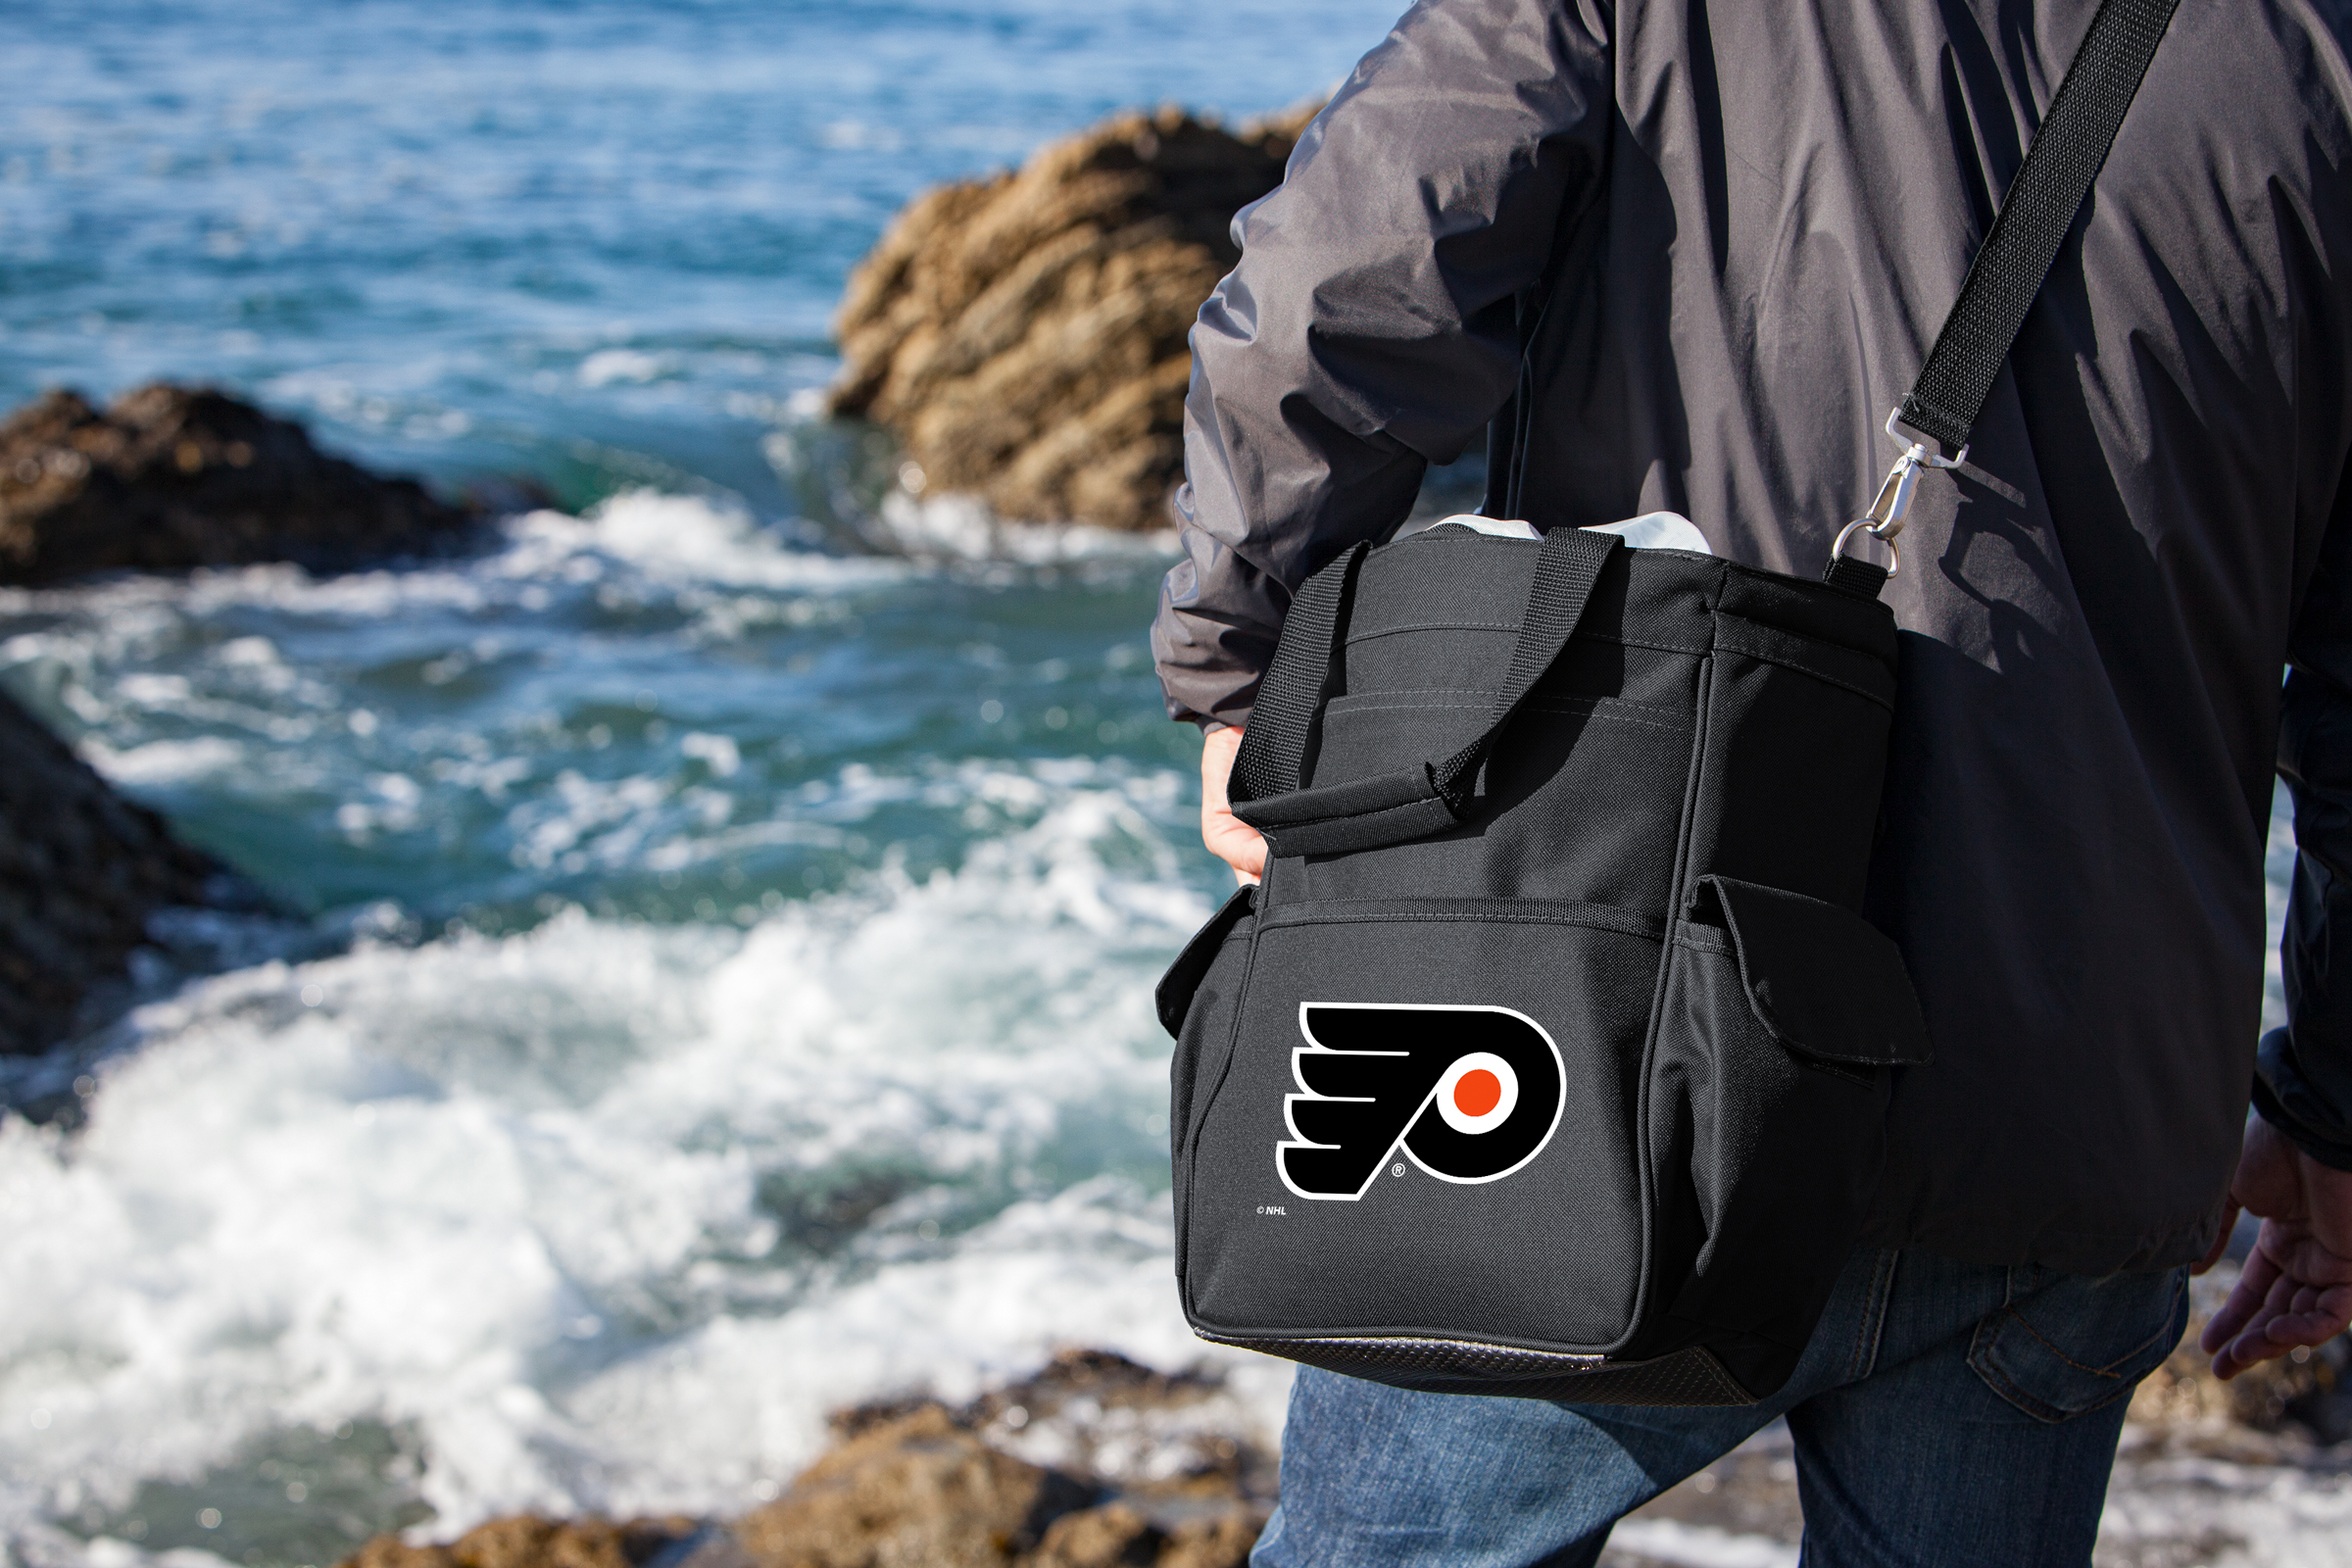 Philadelphia Flyers - Activo Cooler Tote Bag